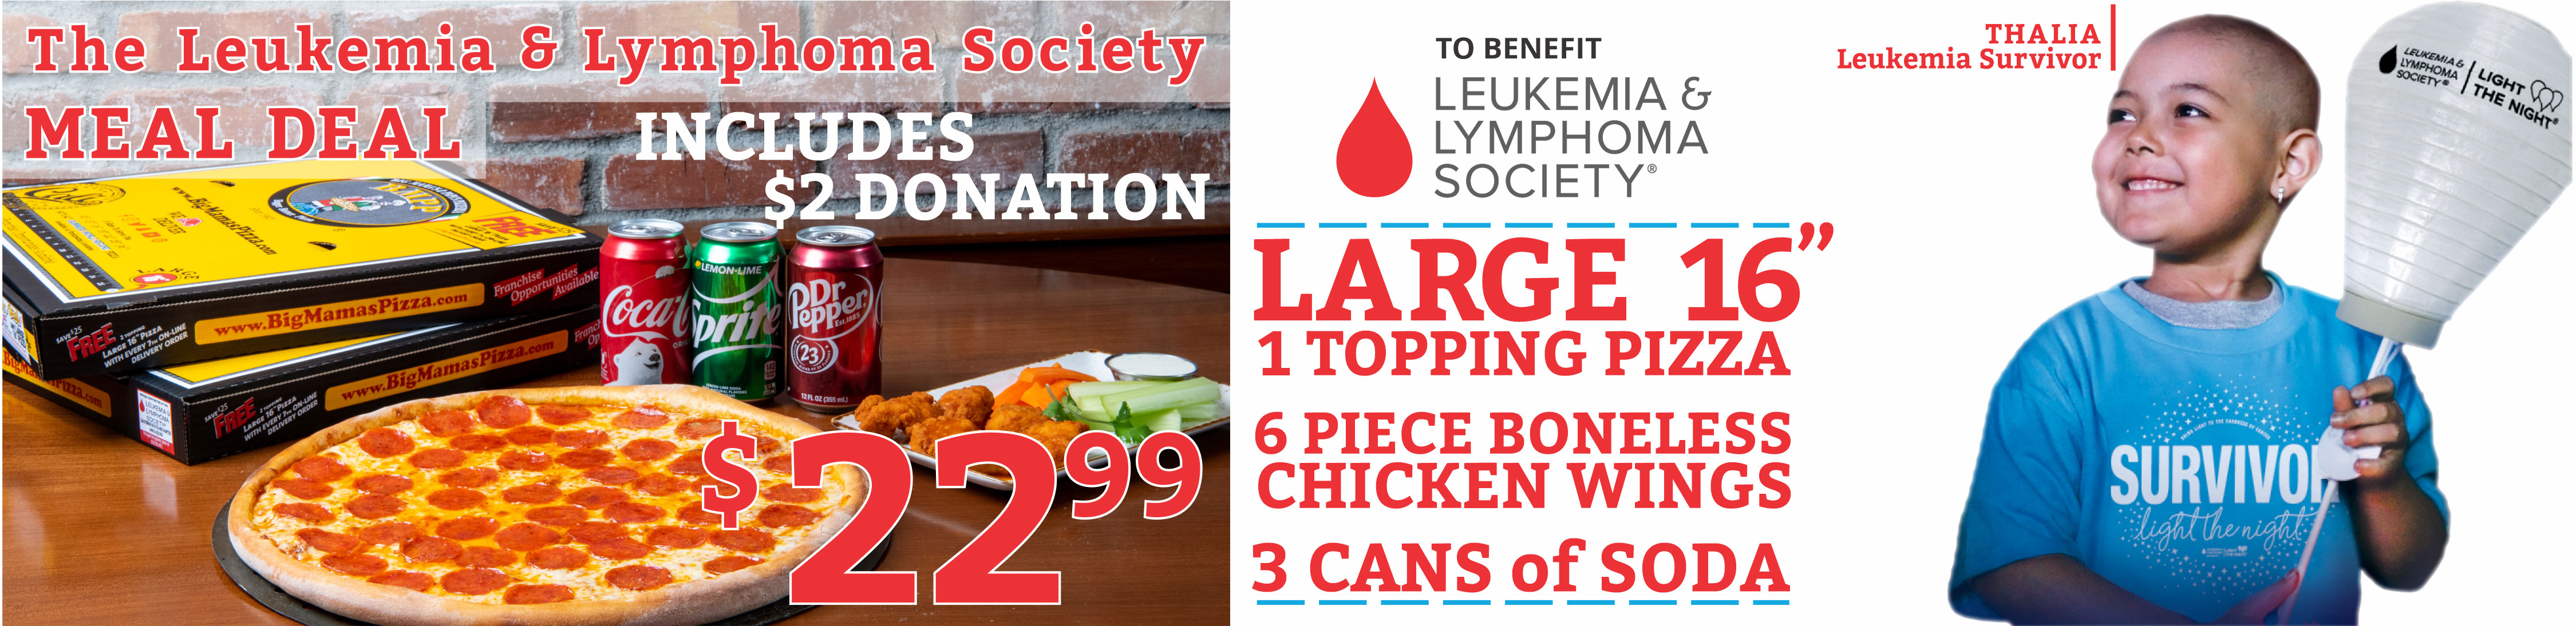 Leukemia & Lymphoma Society Meal Deal